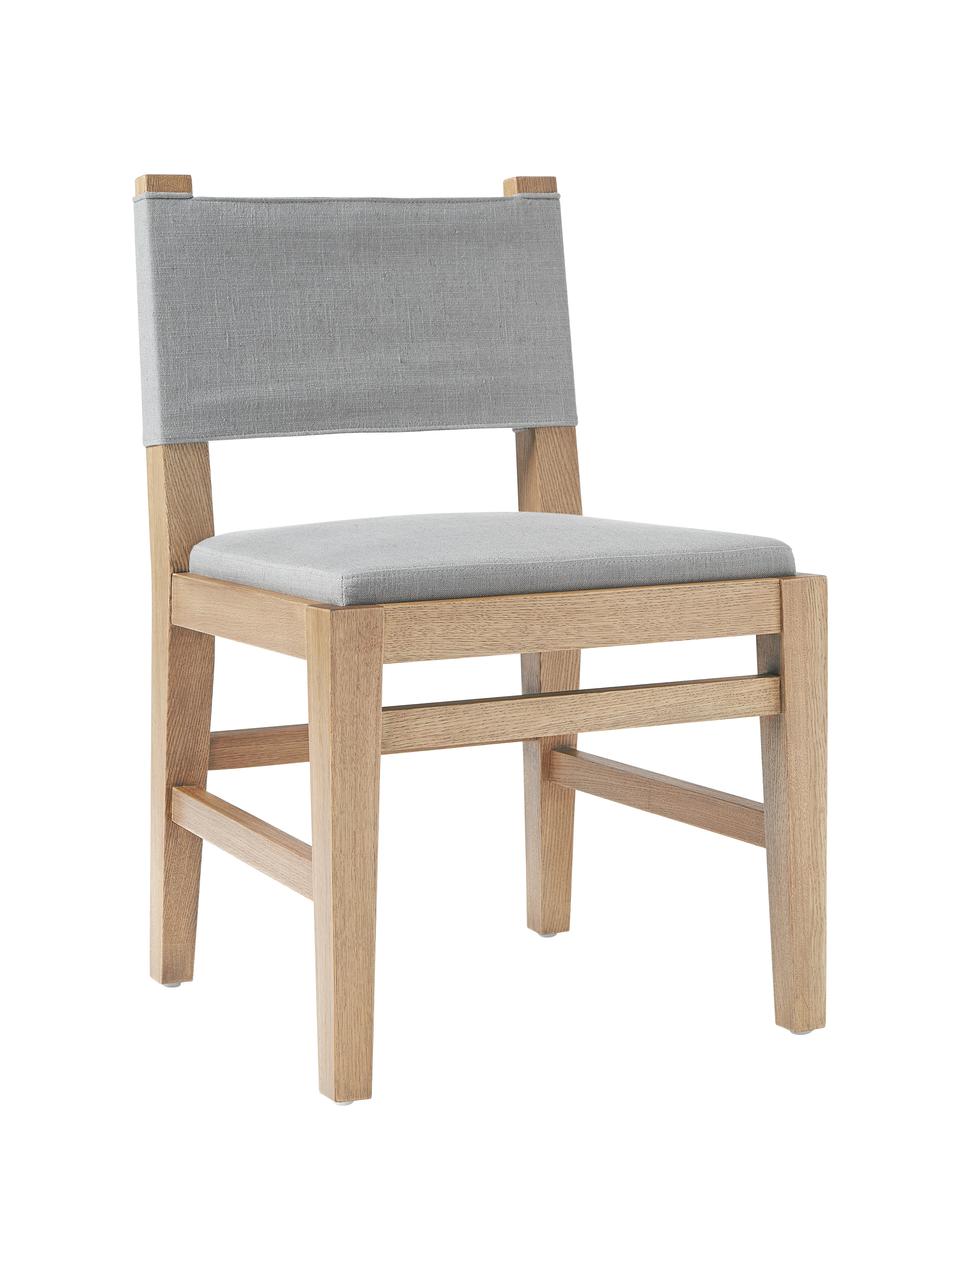 Houten stoel Liano met vulling in grijs, Frame: eikenhout, Bekleding: 54% polyester, 36% viscos, Geweven stof grijs, eikenhout, B 50 x H 80 cm